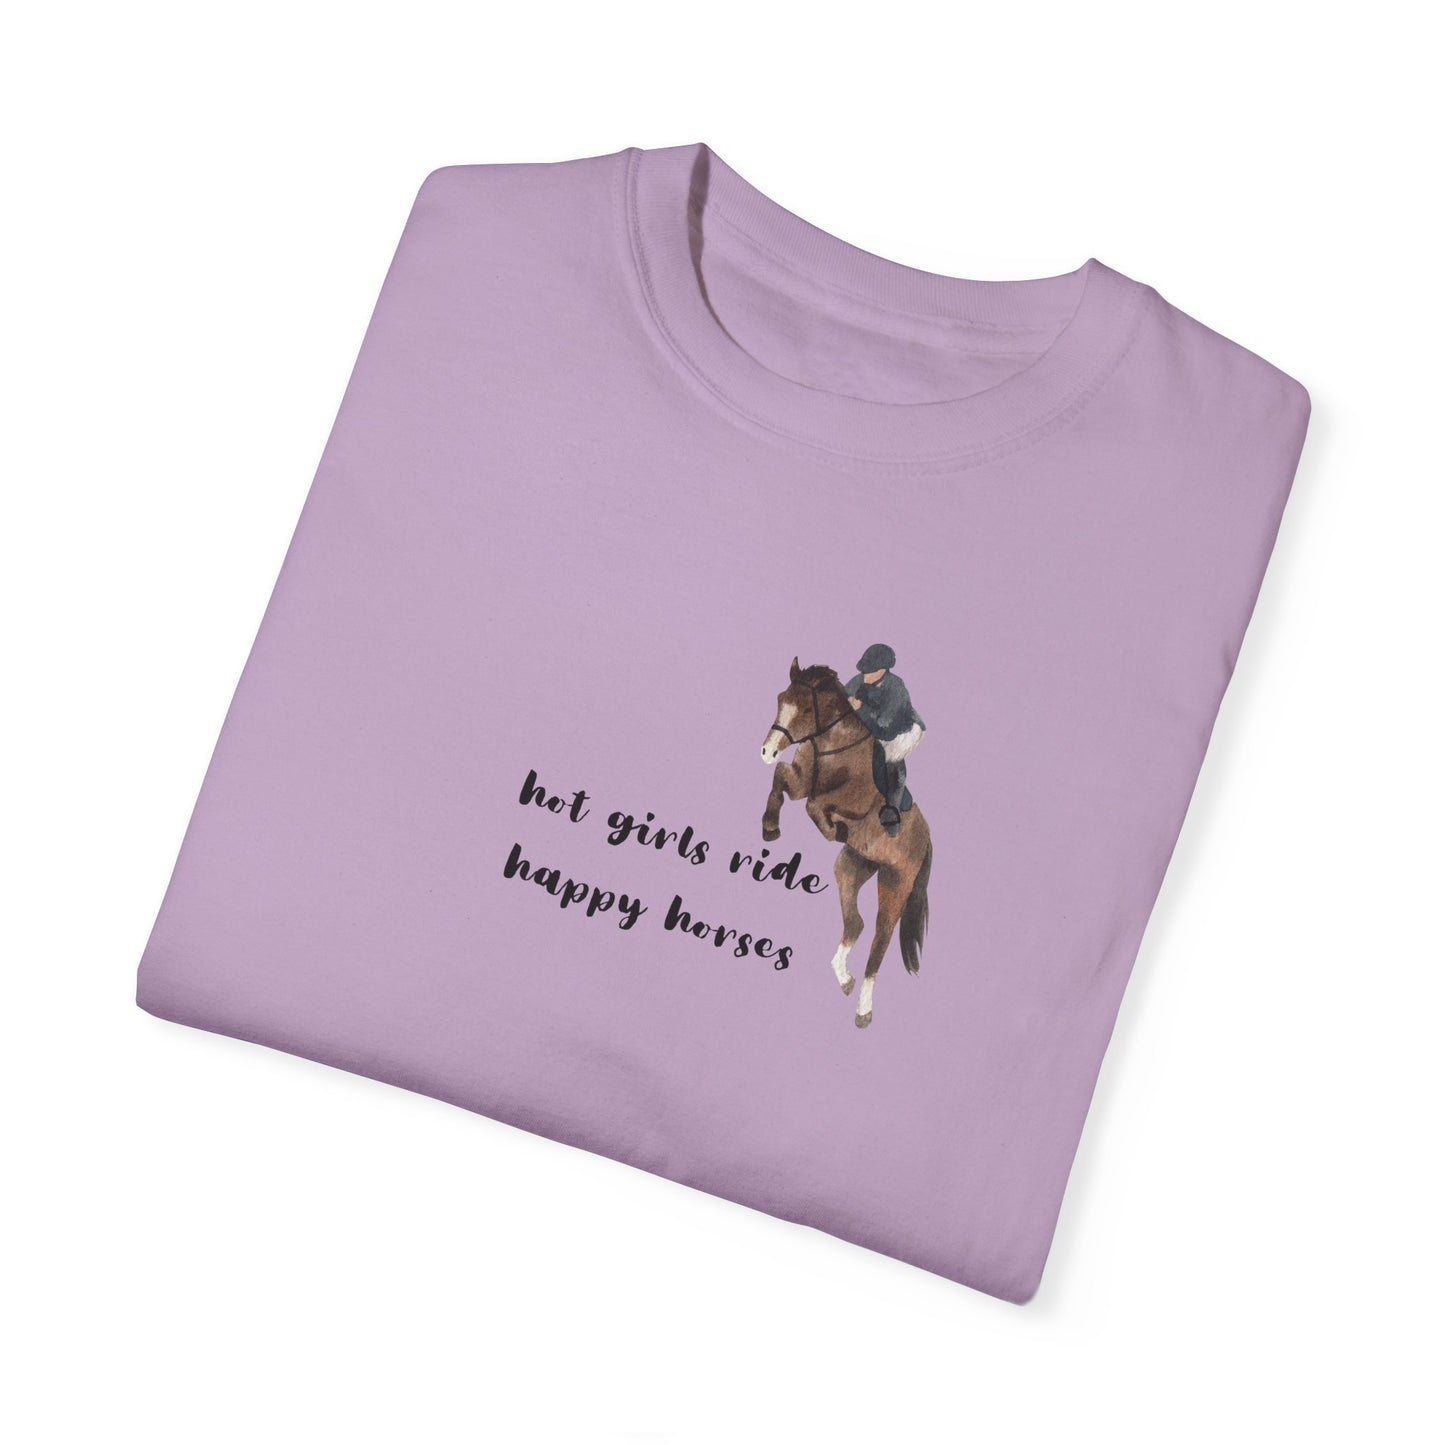 Hot Girls Ride Happy Horses T-shirt